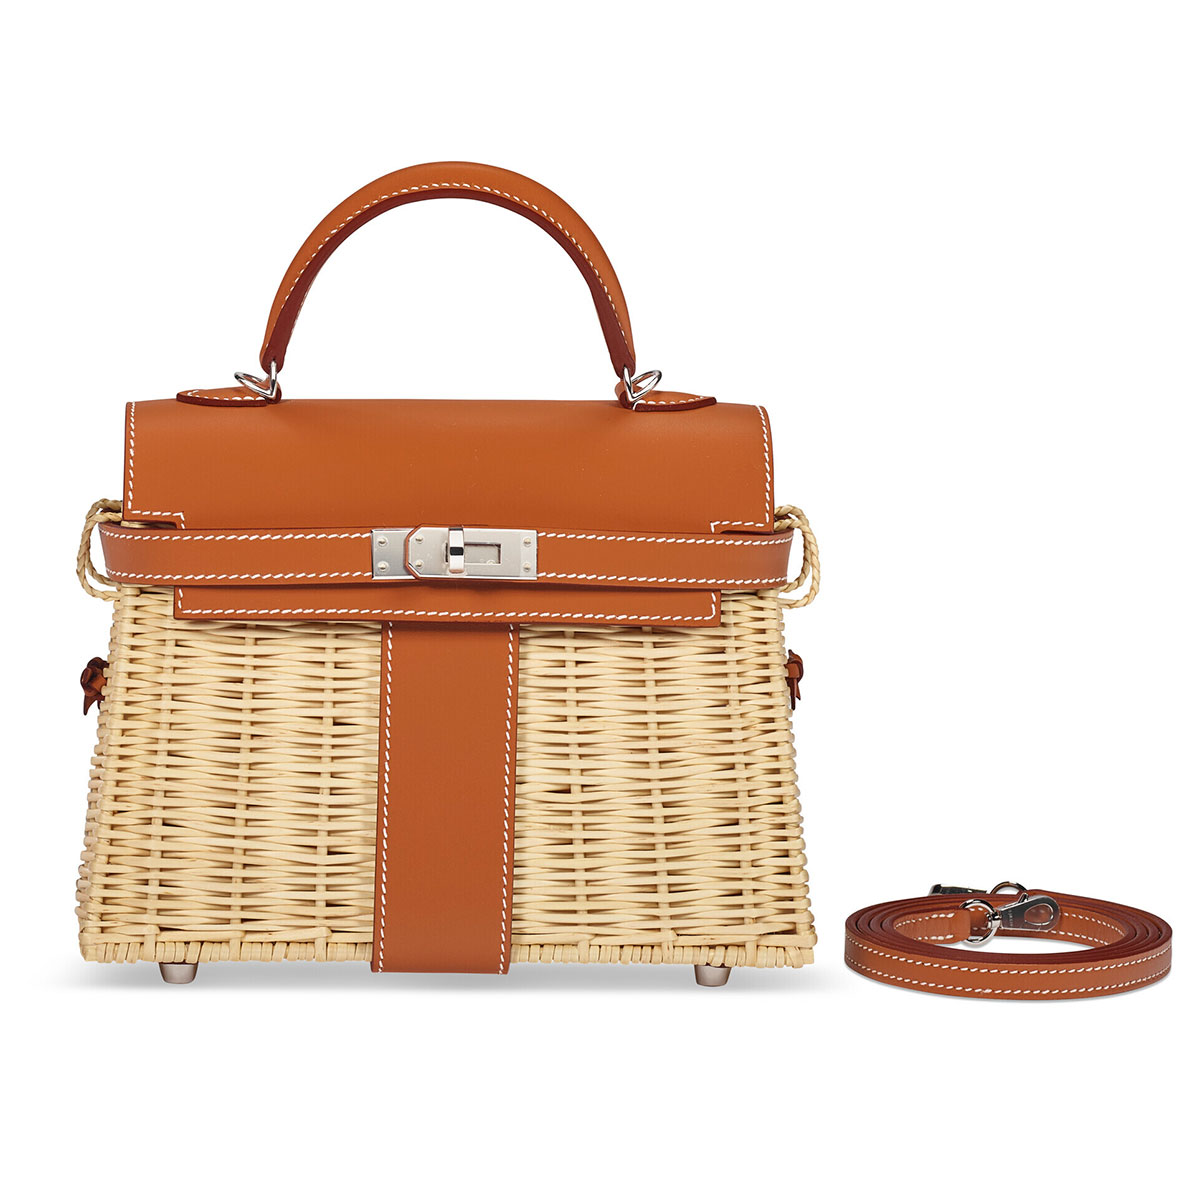 World's Rarest Handbags at Christie's June Auction - PurseBlog